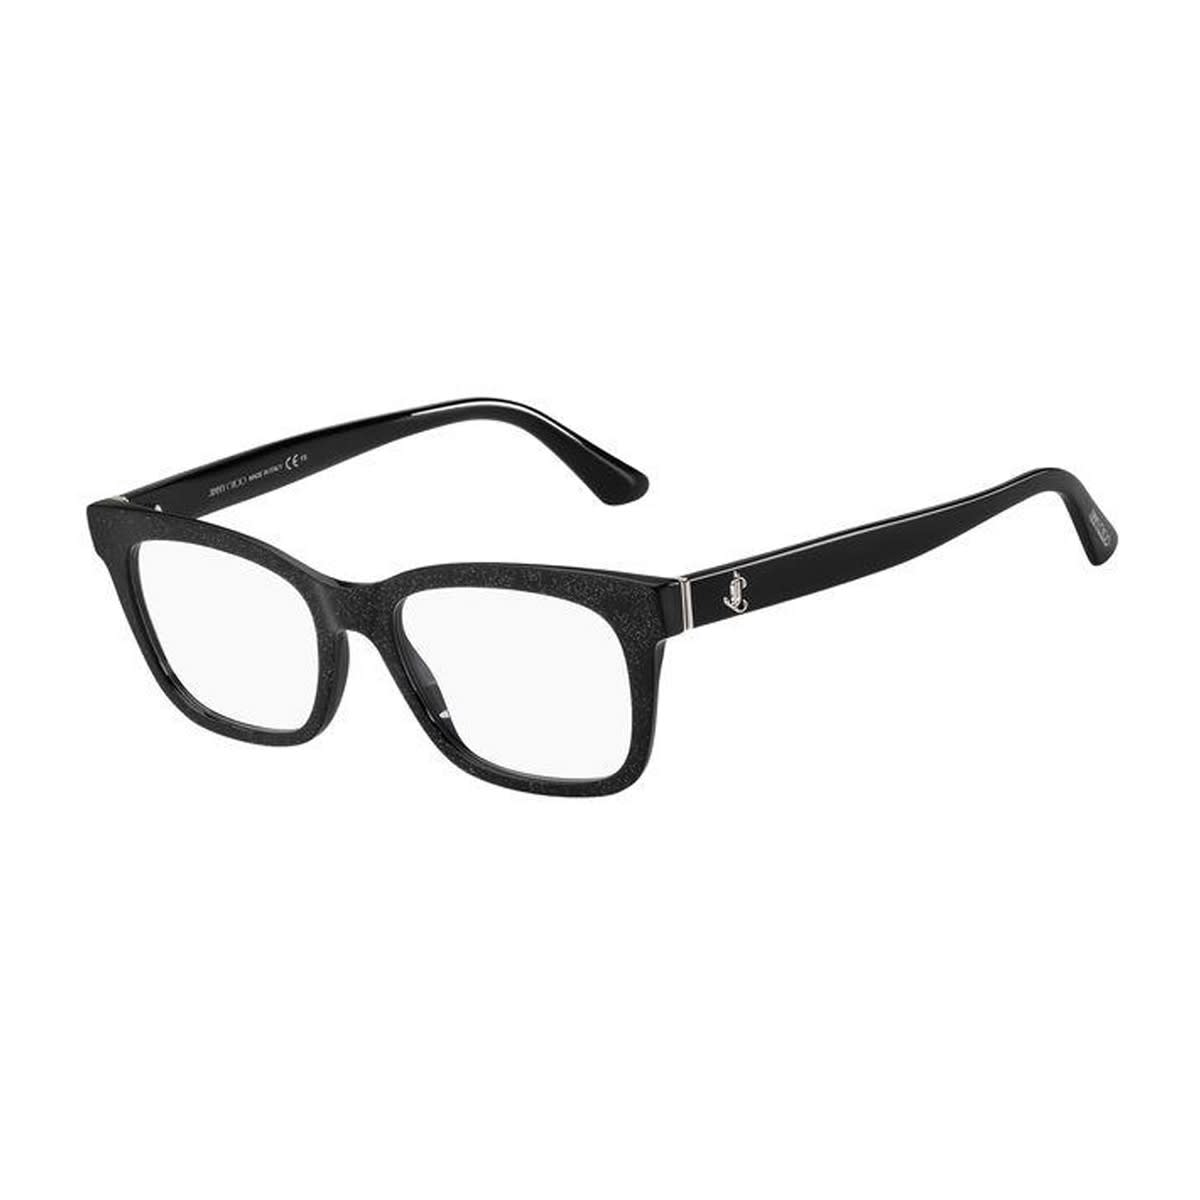 Jimmy Choo Eyewear Jc277 Glasses